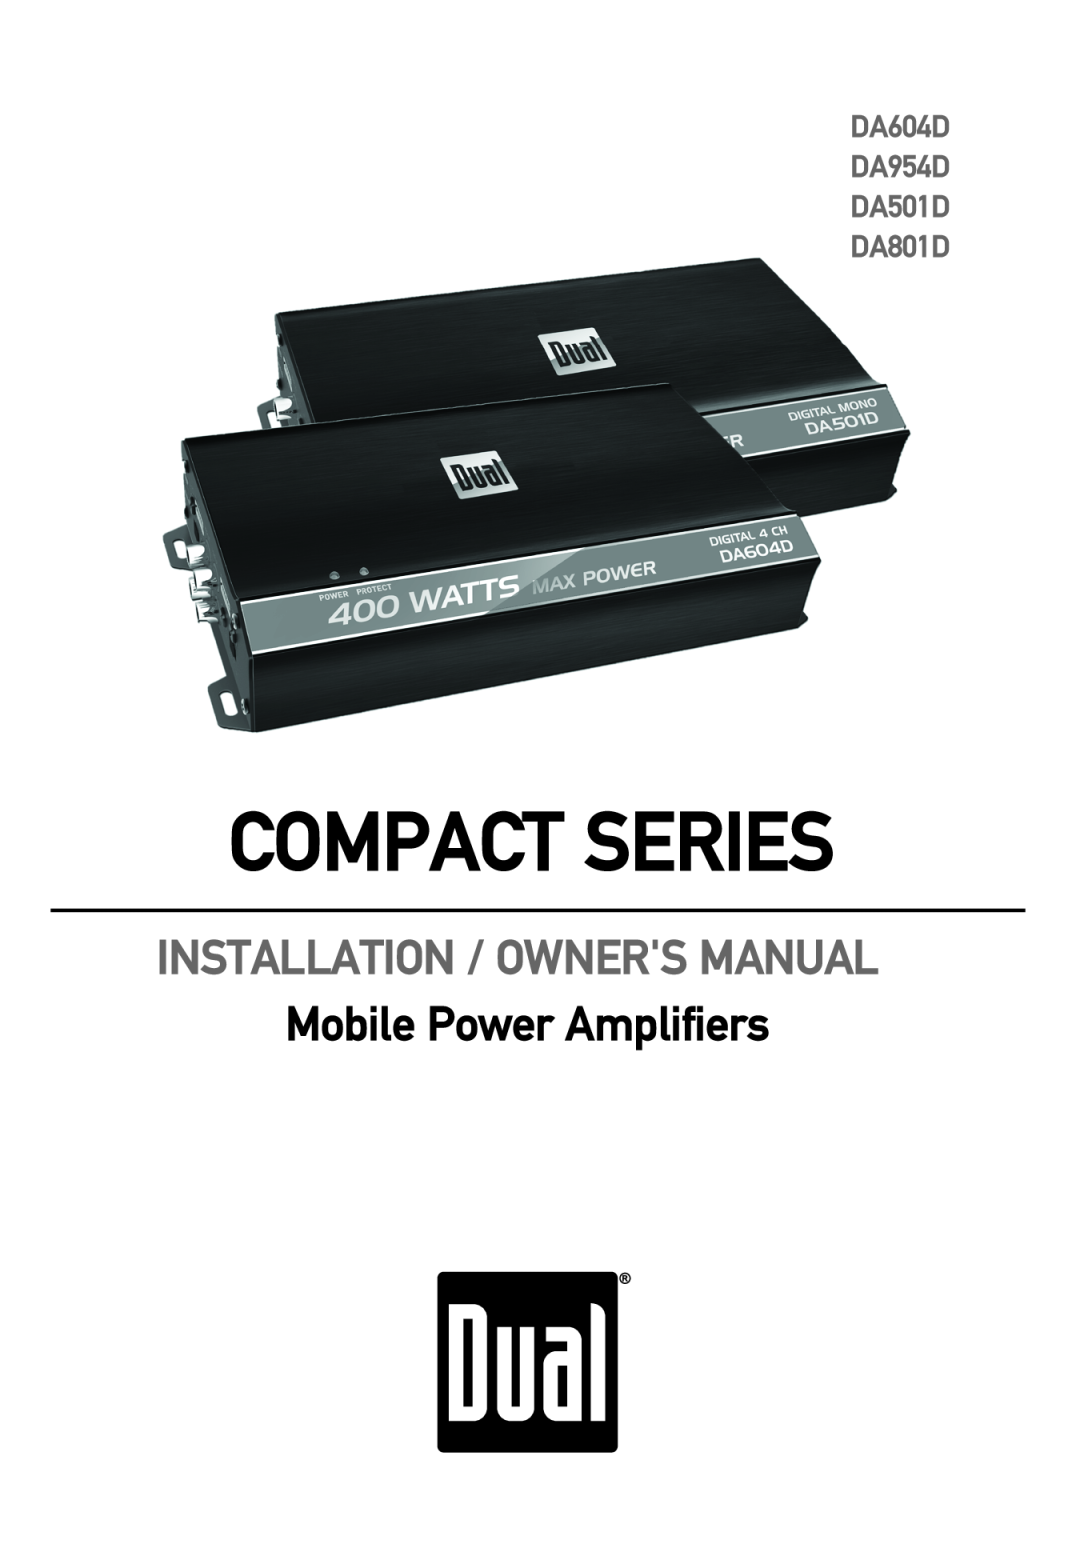 Dual owner manual Compact Series, Mobile Power Amplifiers, DA604D DA954D DA501D DA801D 